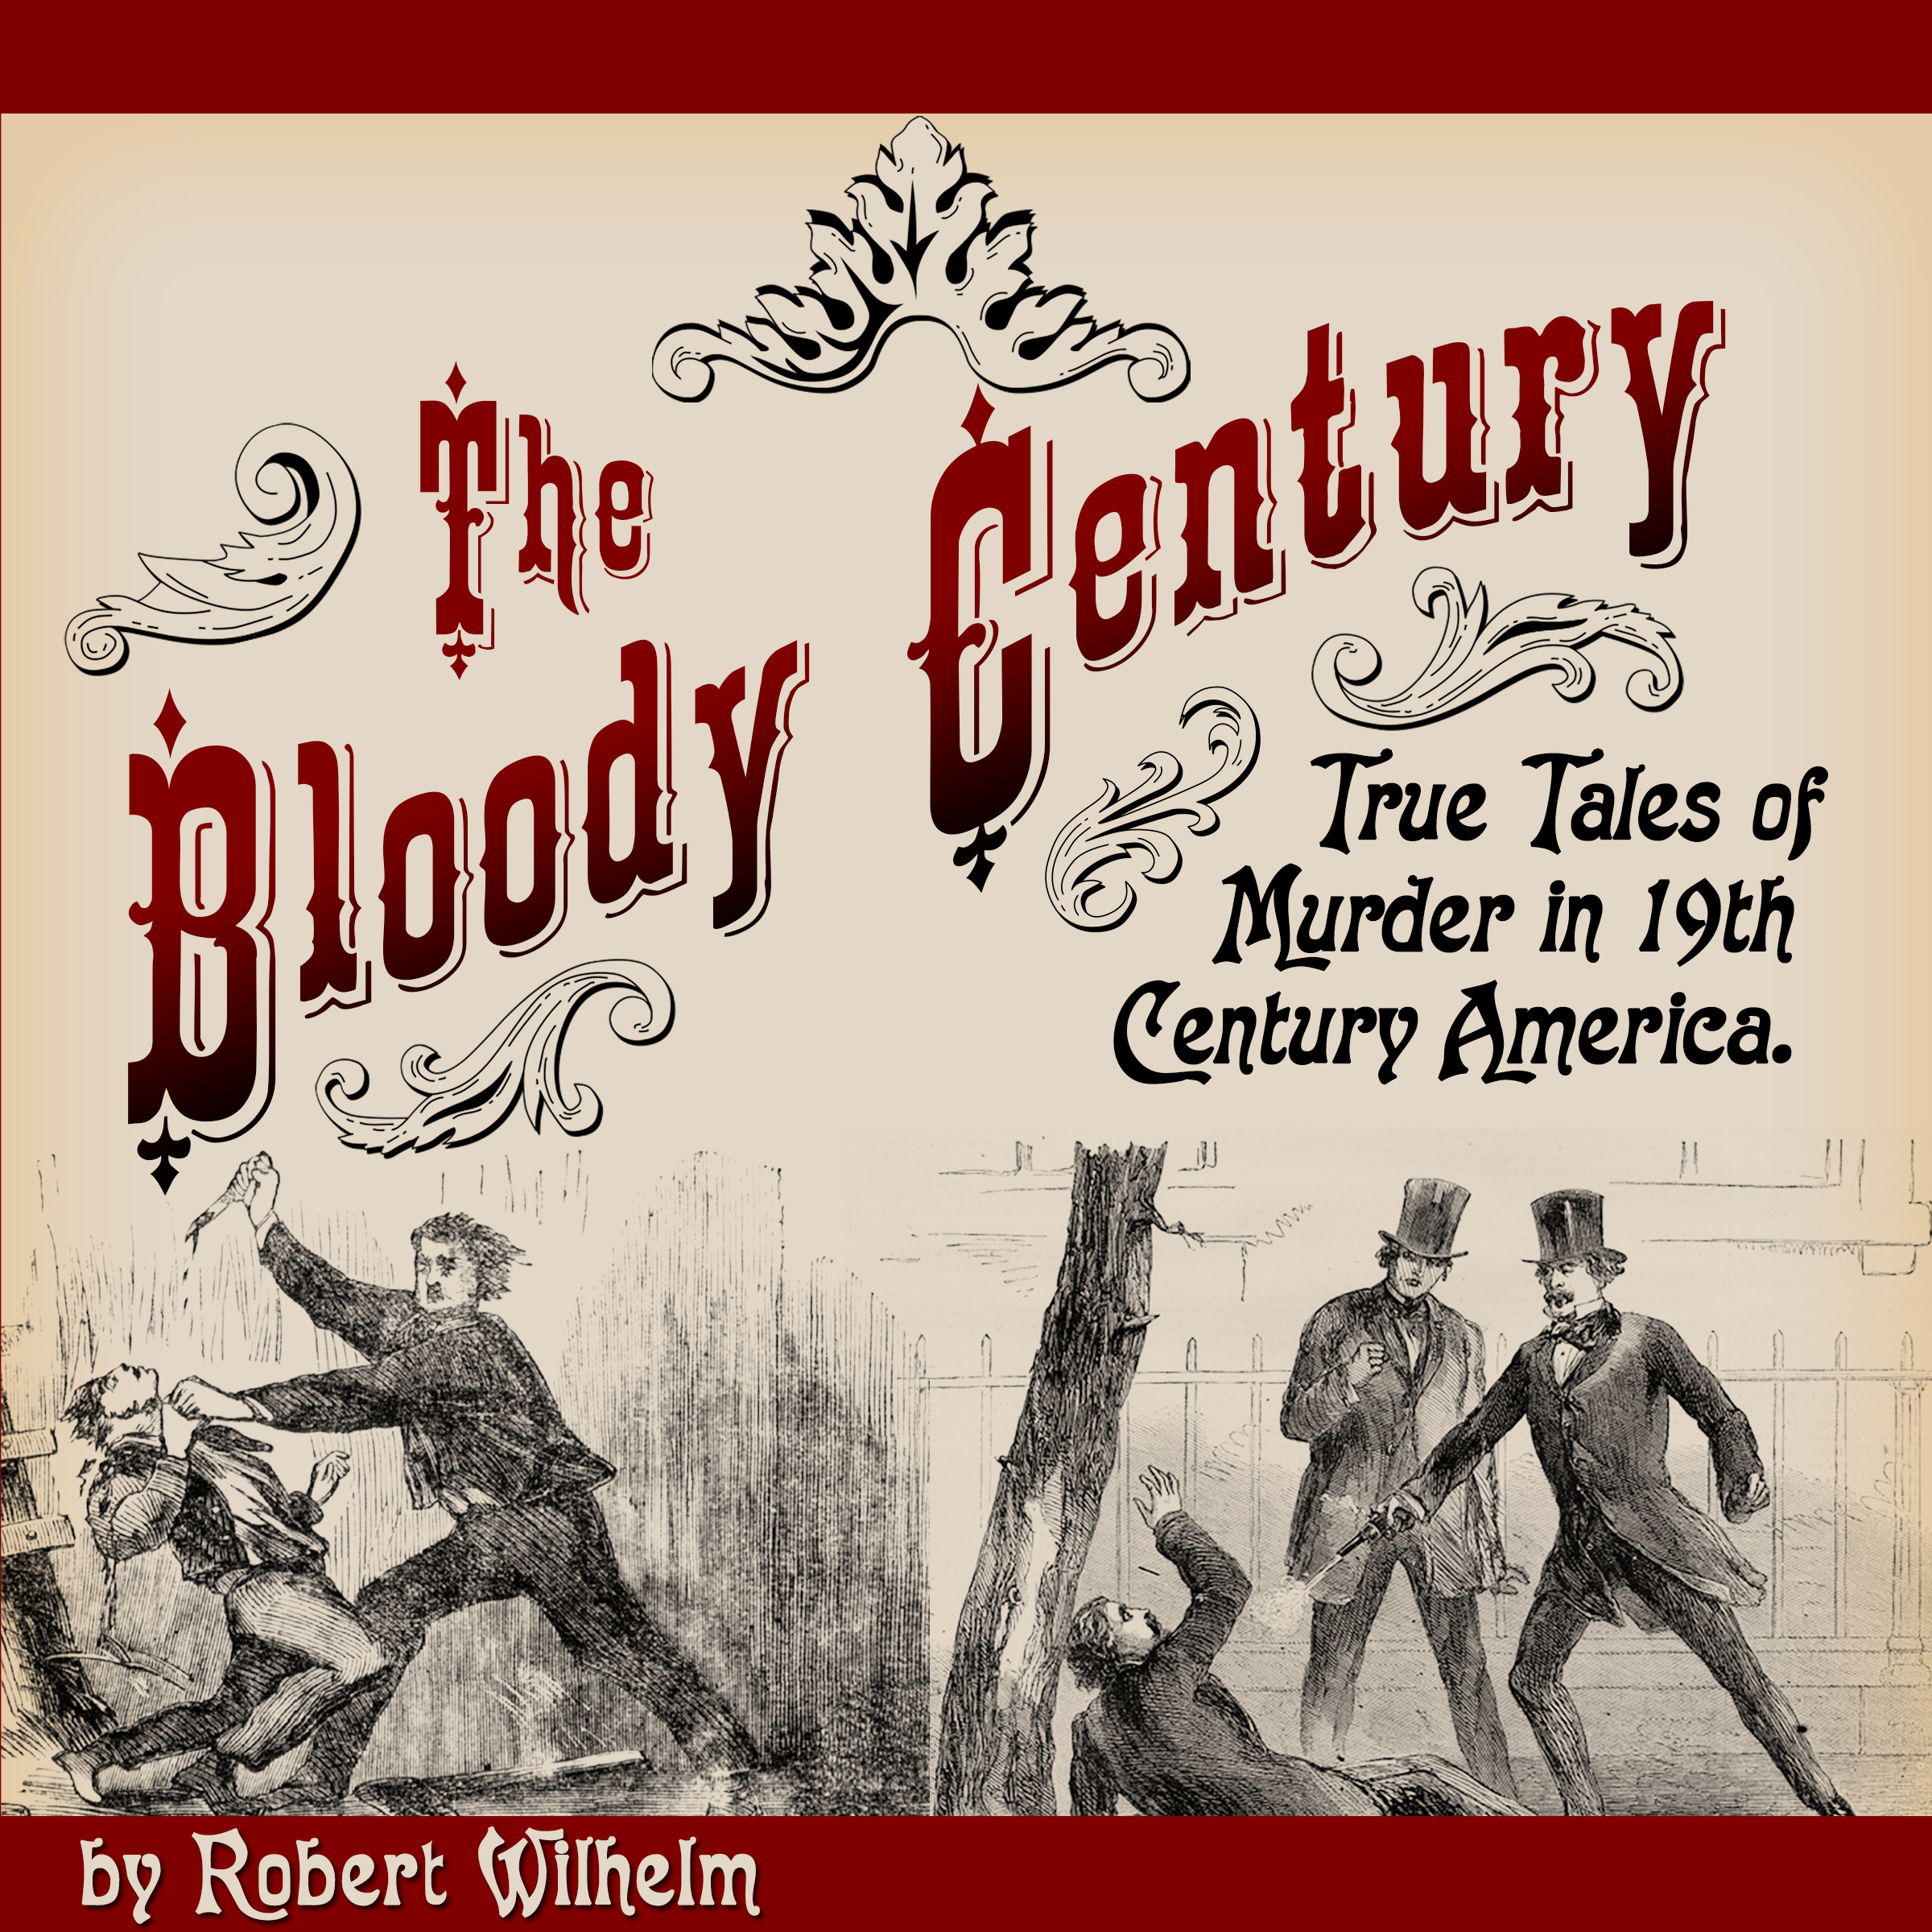 The Bloody Century